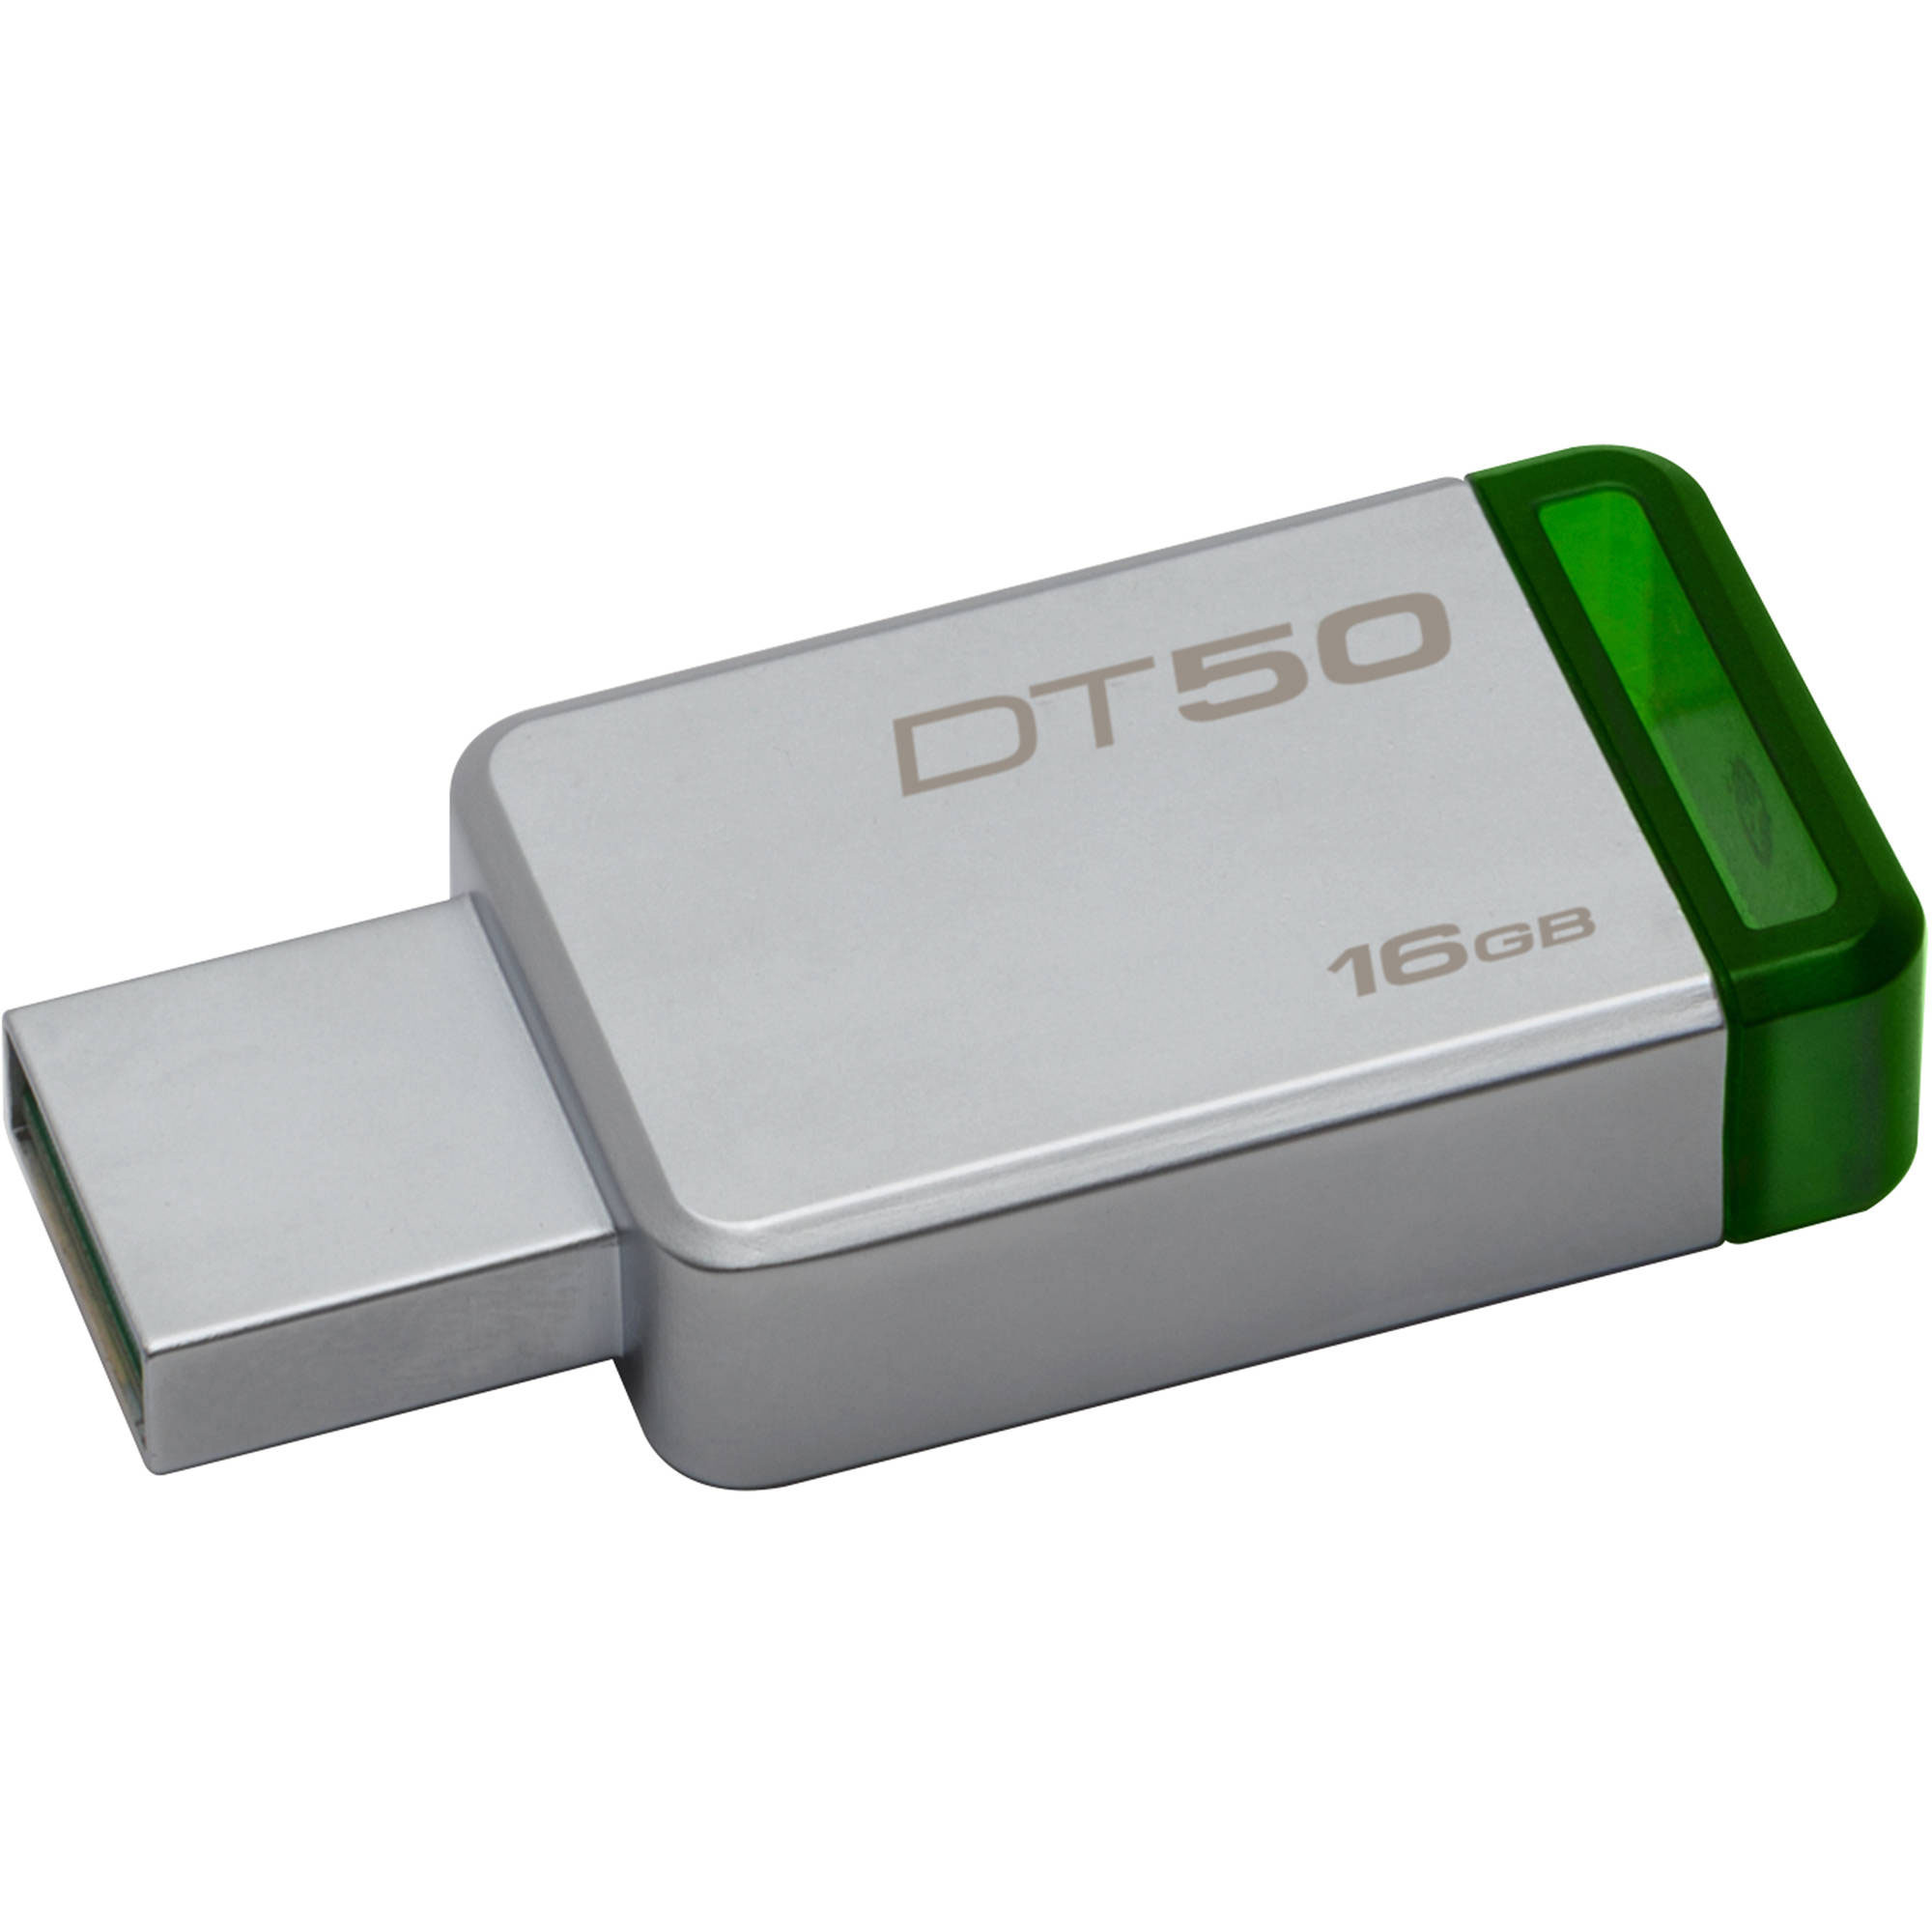 Memorie USB Kingston DT50/16GB, 16GB, USB 3.0, Gri